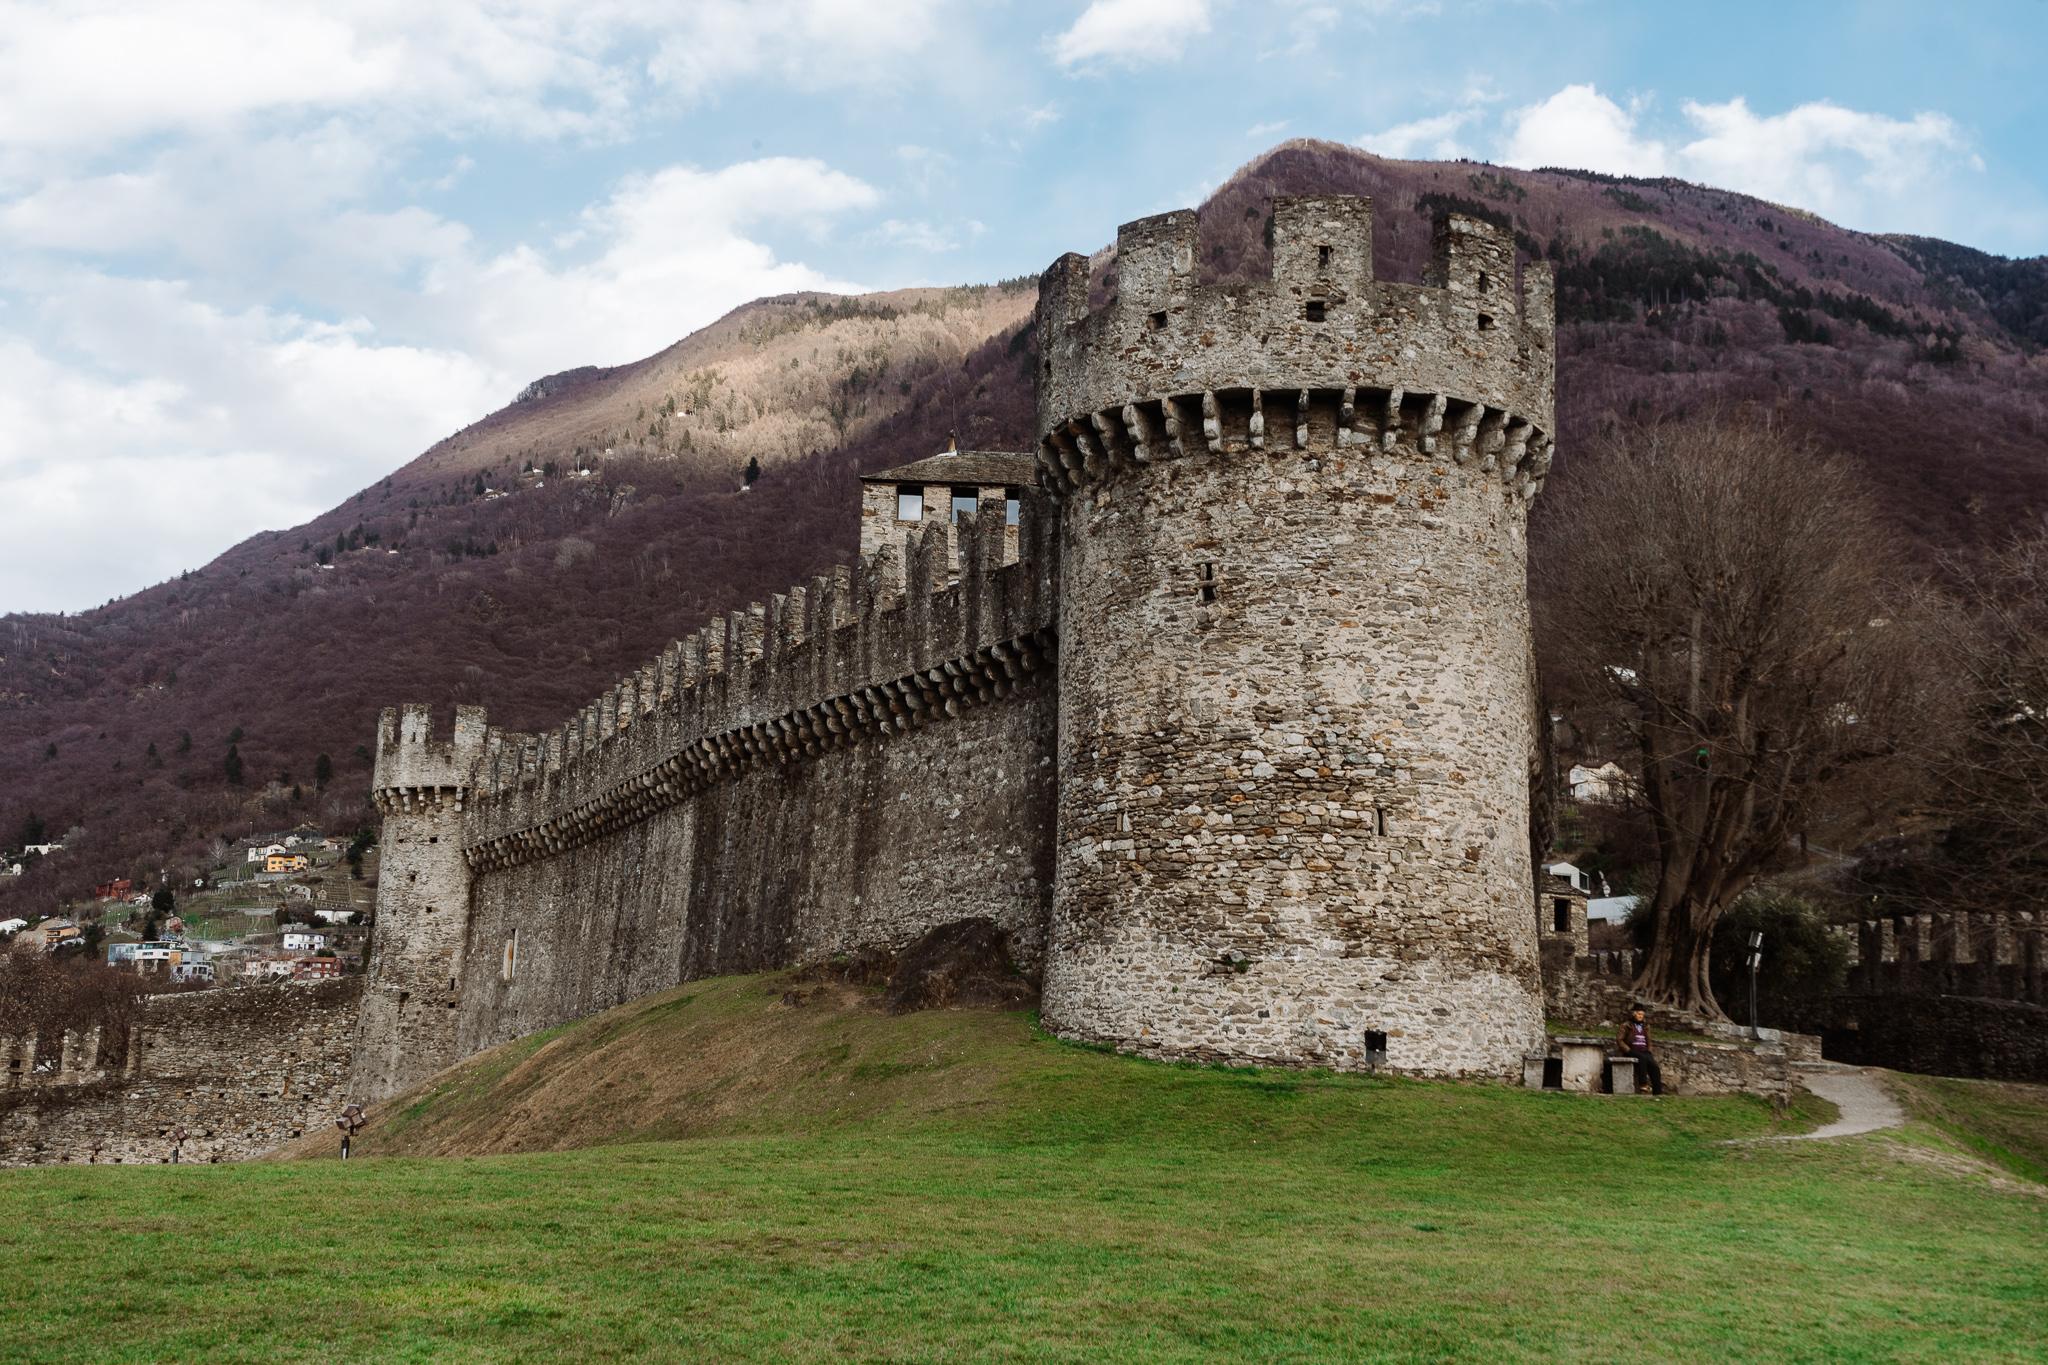 A medieval castle turret and wall in Bellinzona, Ticino Switzerland